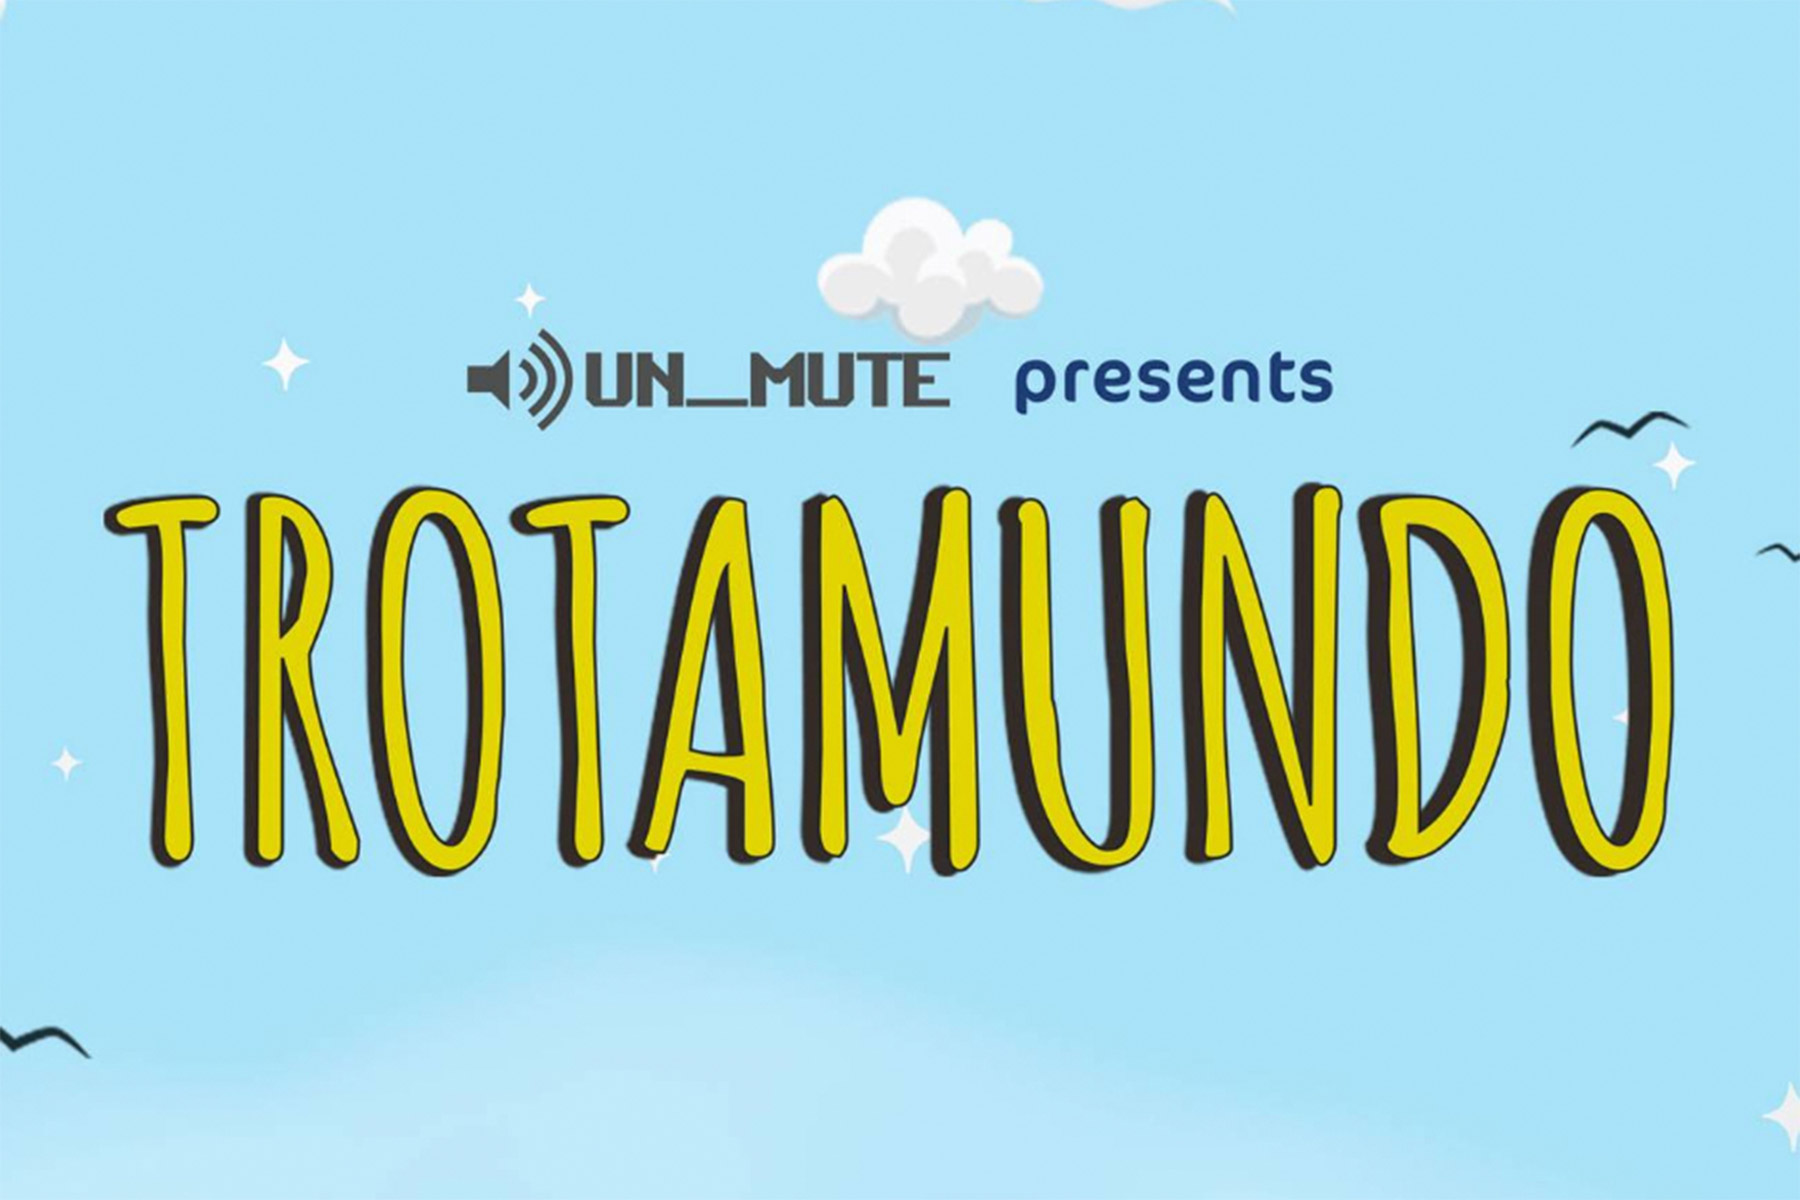 UN_MUTE presents Trotamundo with over 60 artists in Montañita